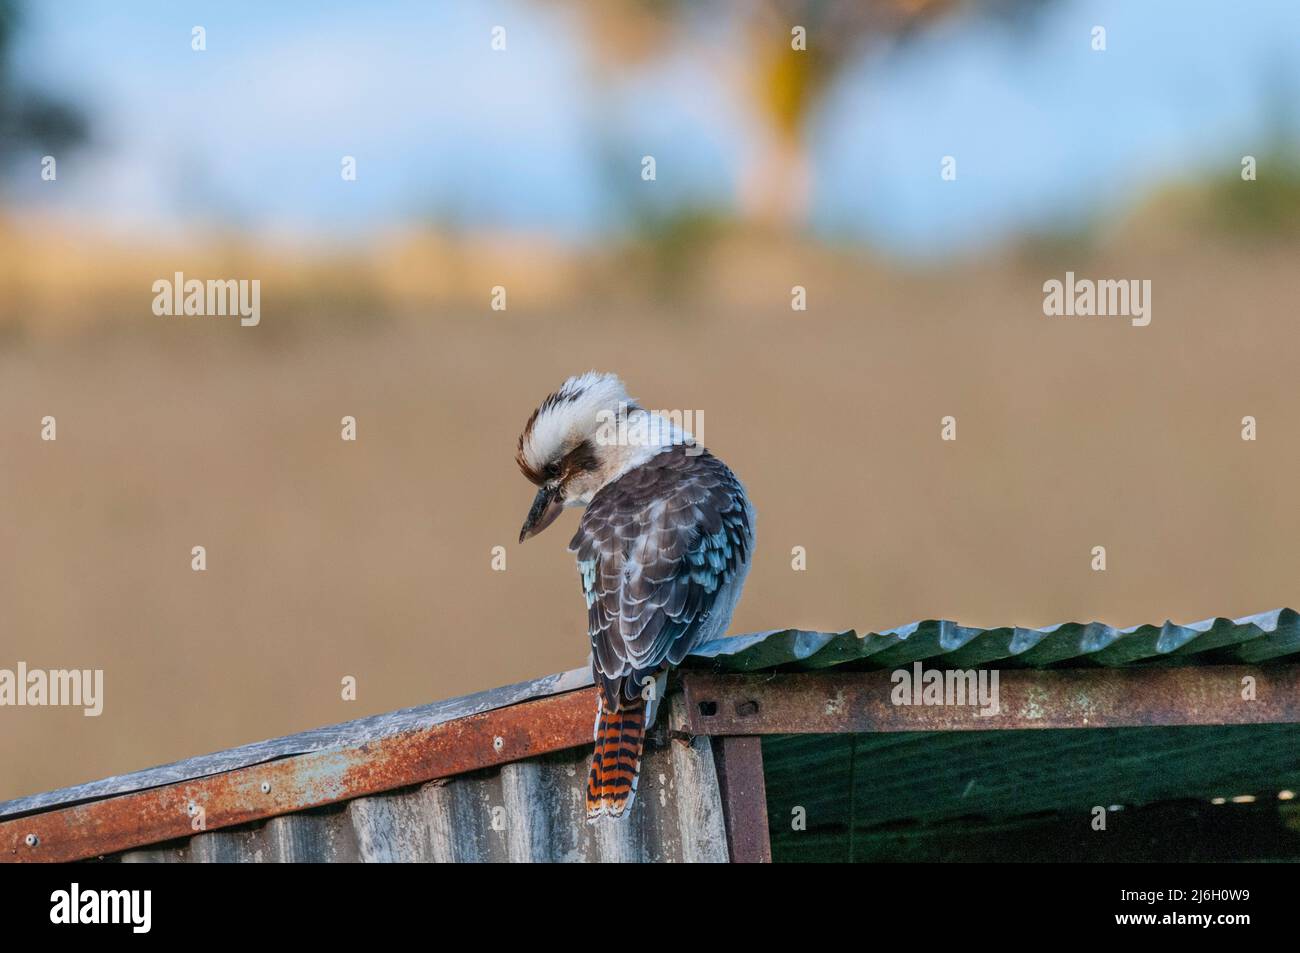 Australian Kookaburra, The laughing kookaburra is a bird in the kingfisher subfamily Halcyoninae, seen here resting on an old tin shed Stock Photo